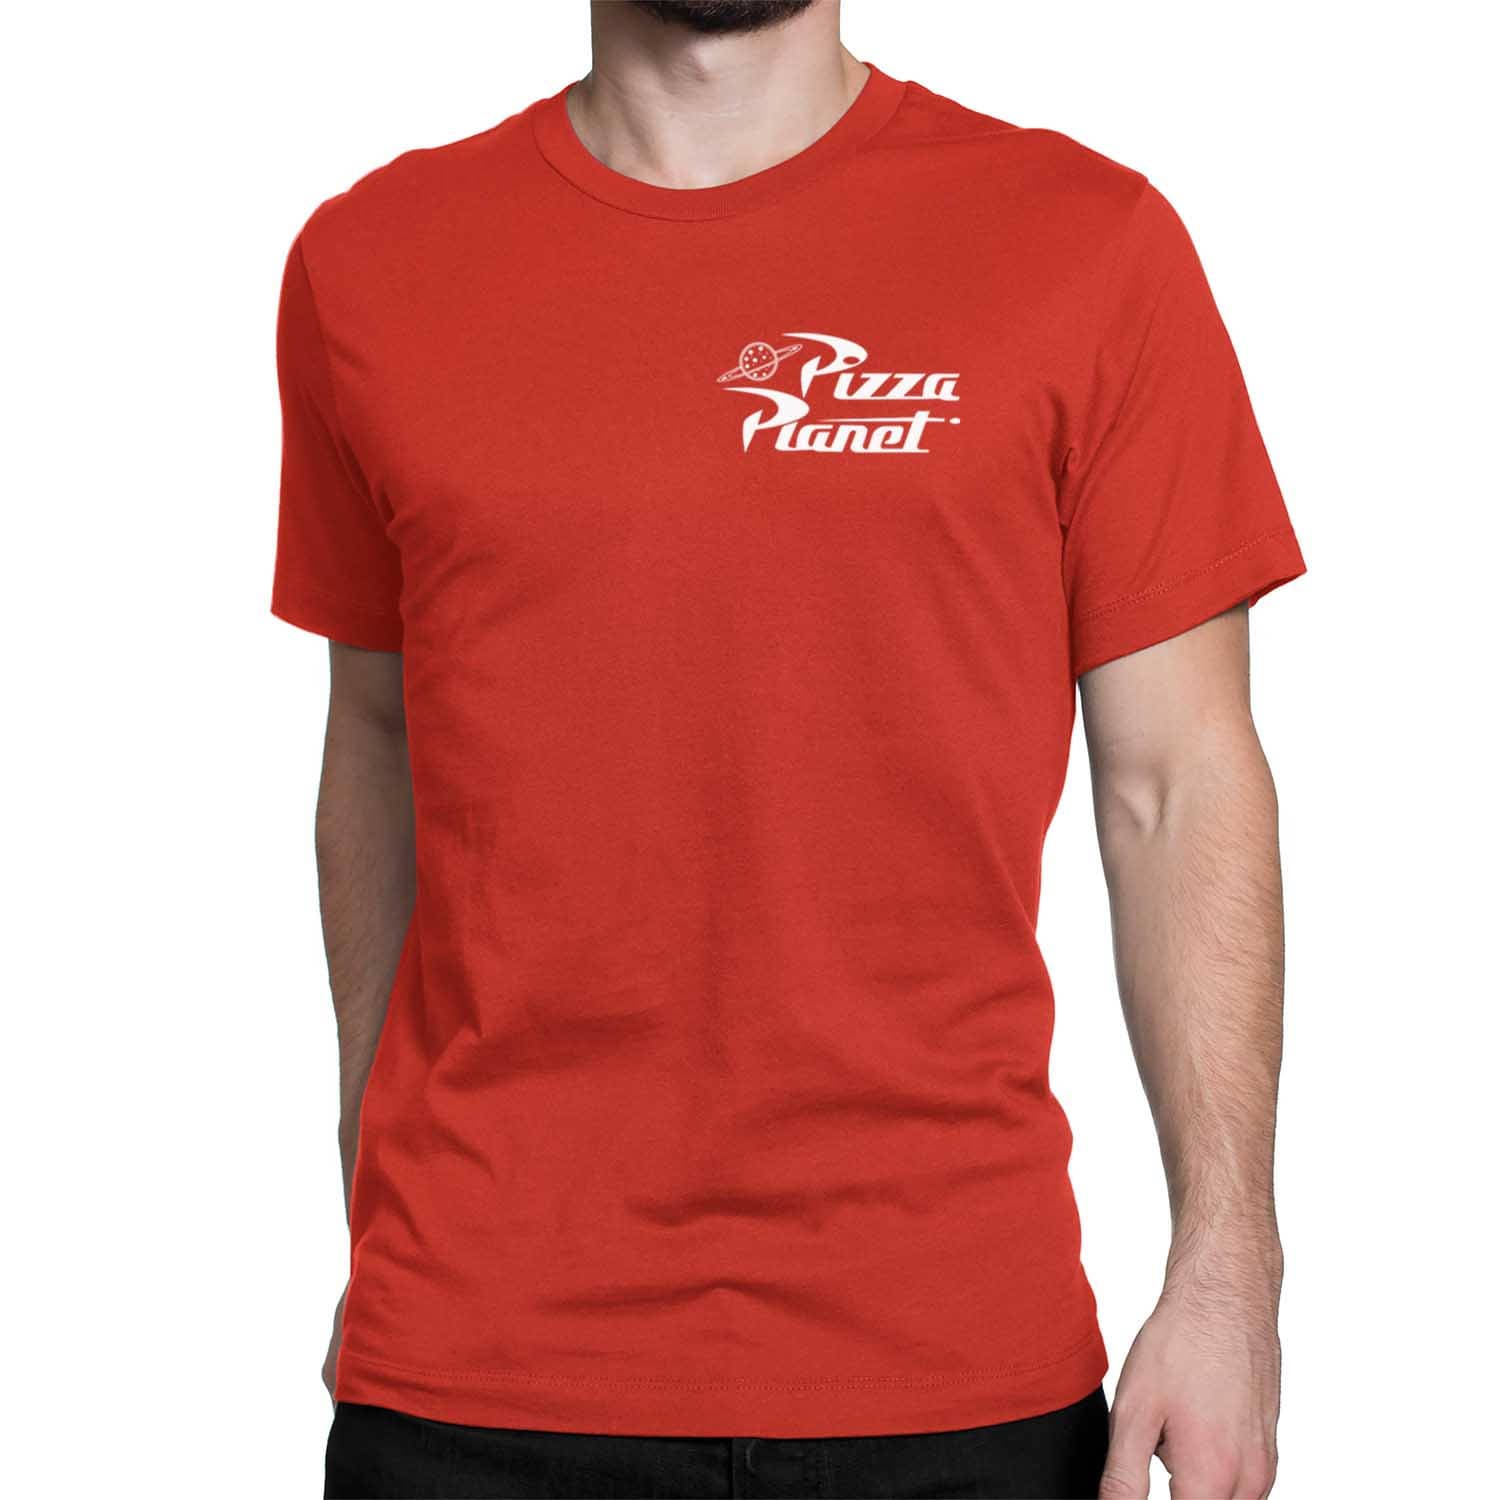 Pizza Planet T-shirt Vacation Story T-shirt Disney Etsy Print - Left Shirt Youth kids Men Toy Pocket Family Shirts Shirt Women 